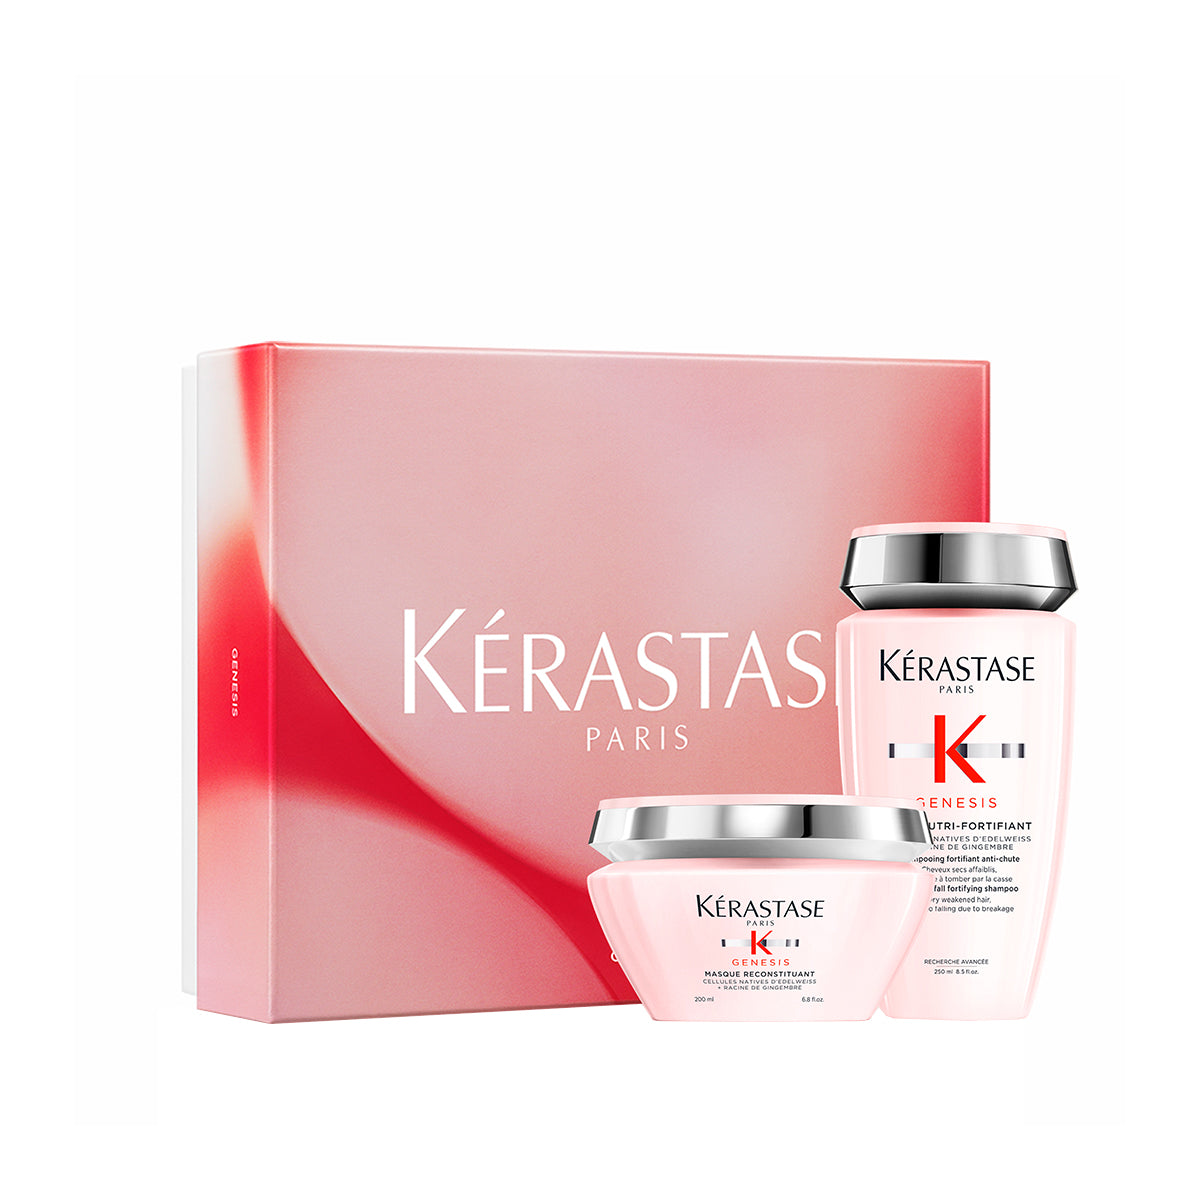 Kerastase Genesis Limited Edition Σετ Περιποίησης για Αδύναμα Μαλλιά Κατά της Τριχόπτωσης (Σαμπουάν 250ml, Μάσκα 200ml)